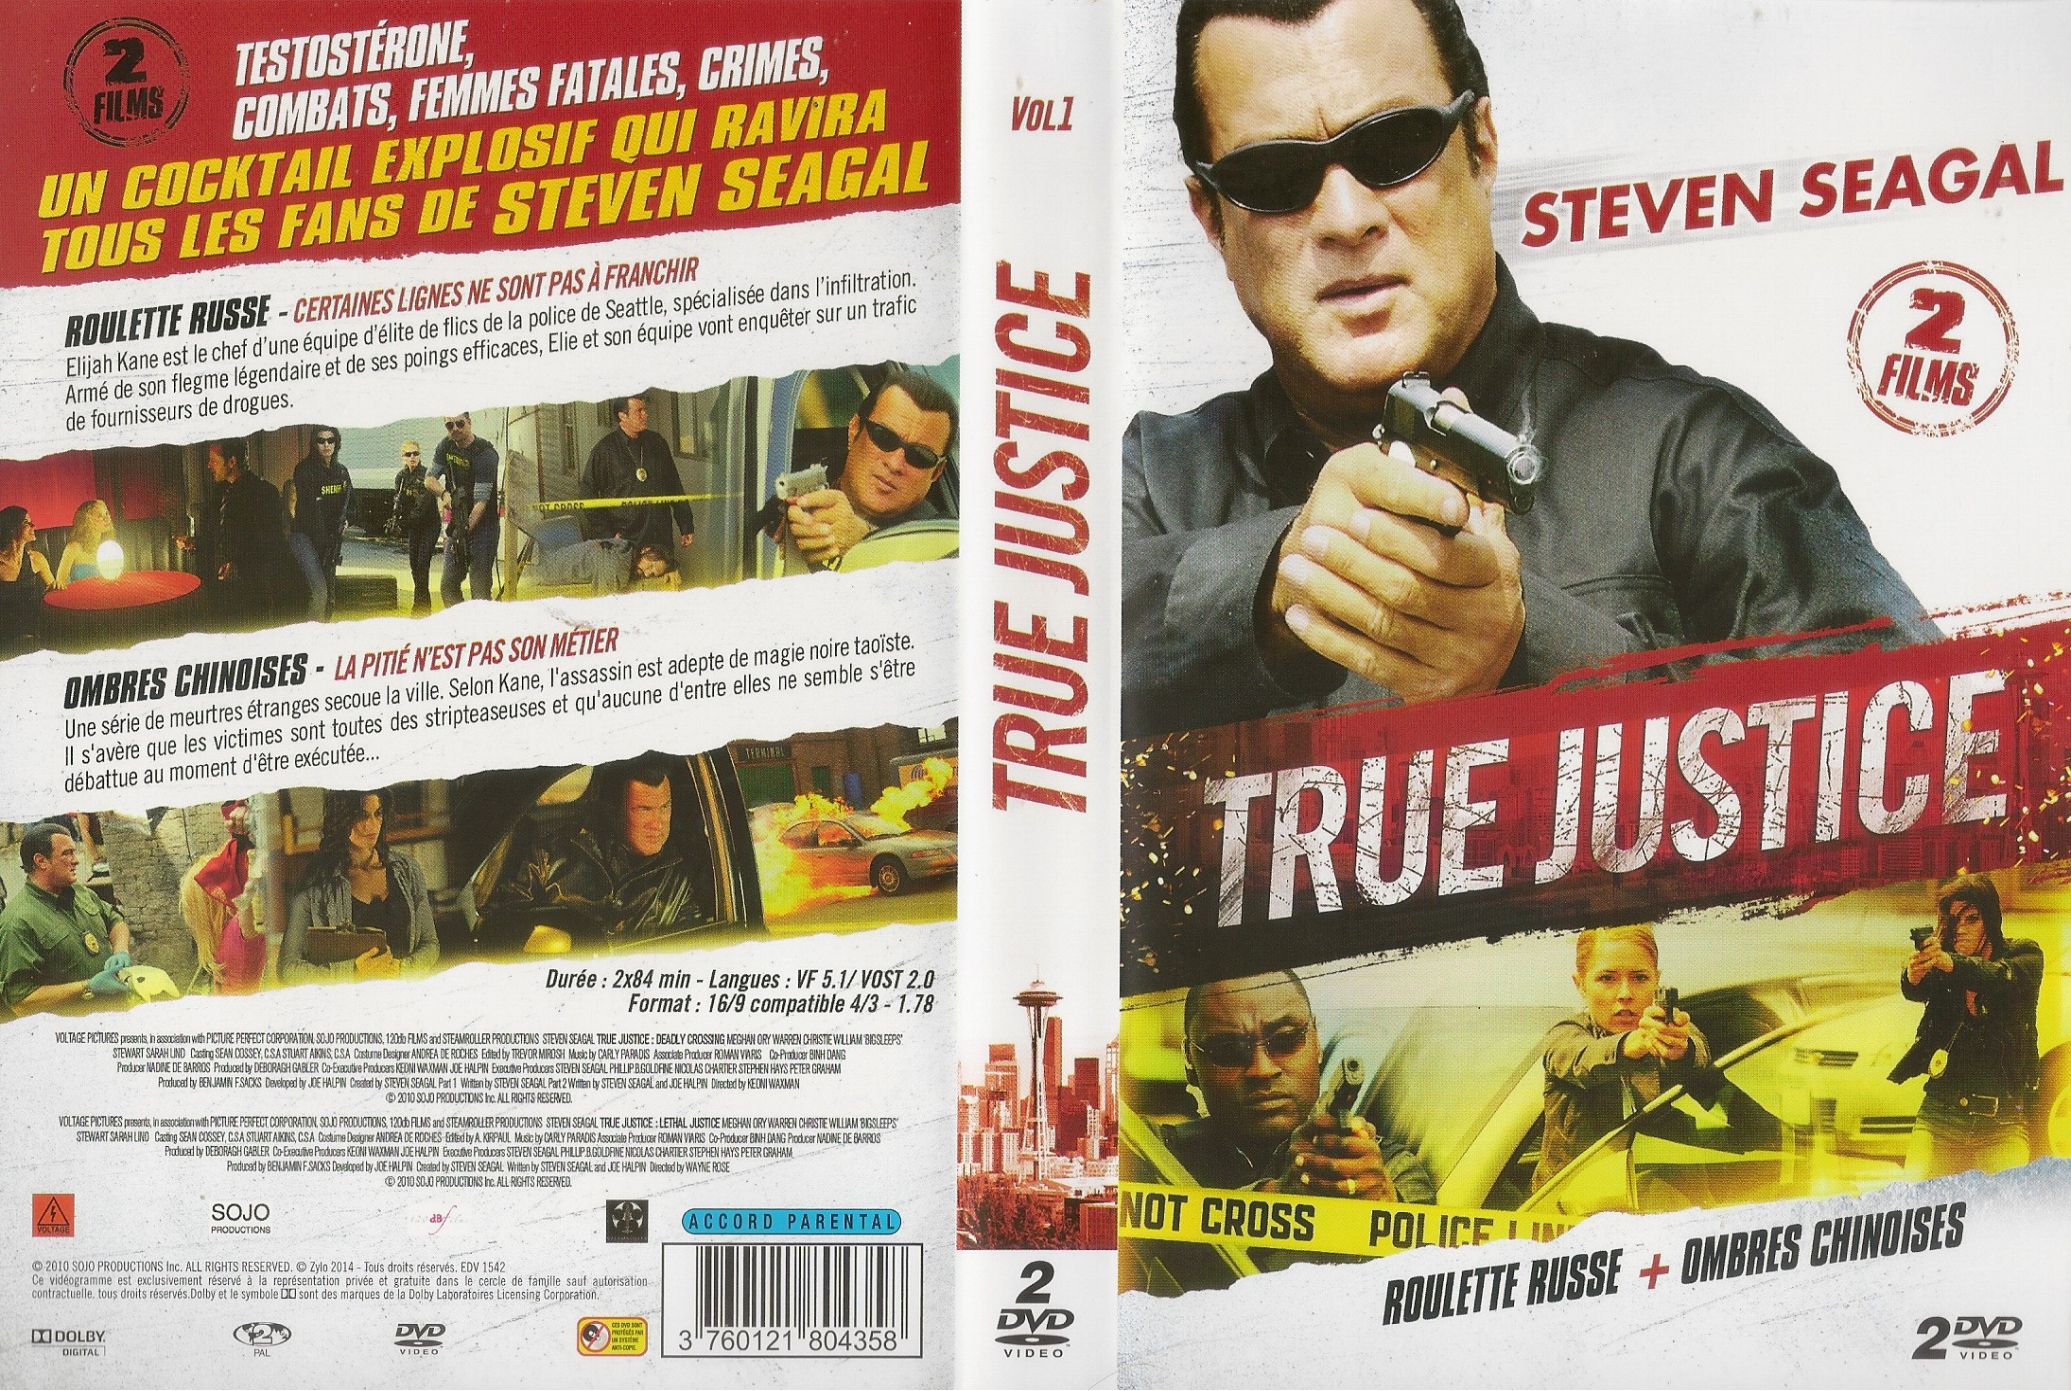 Jaquette DVD True Justice vol 01